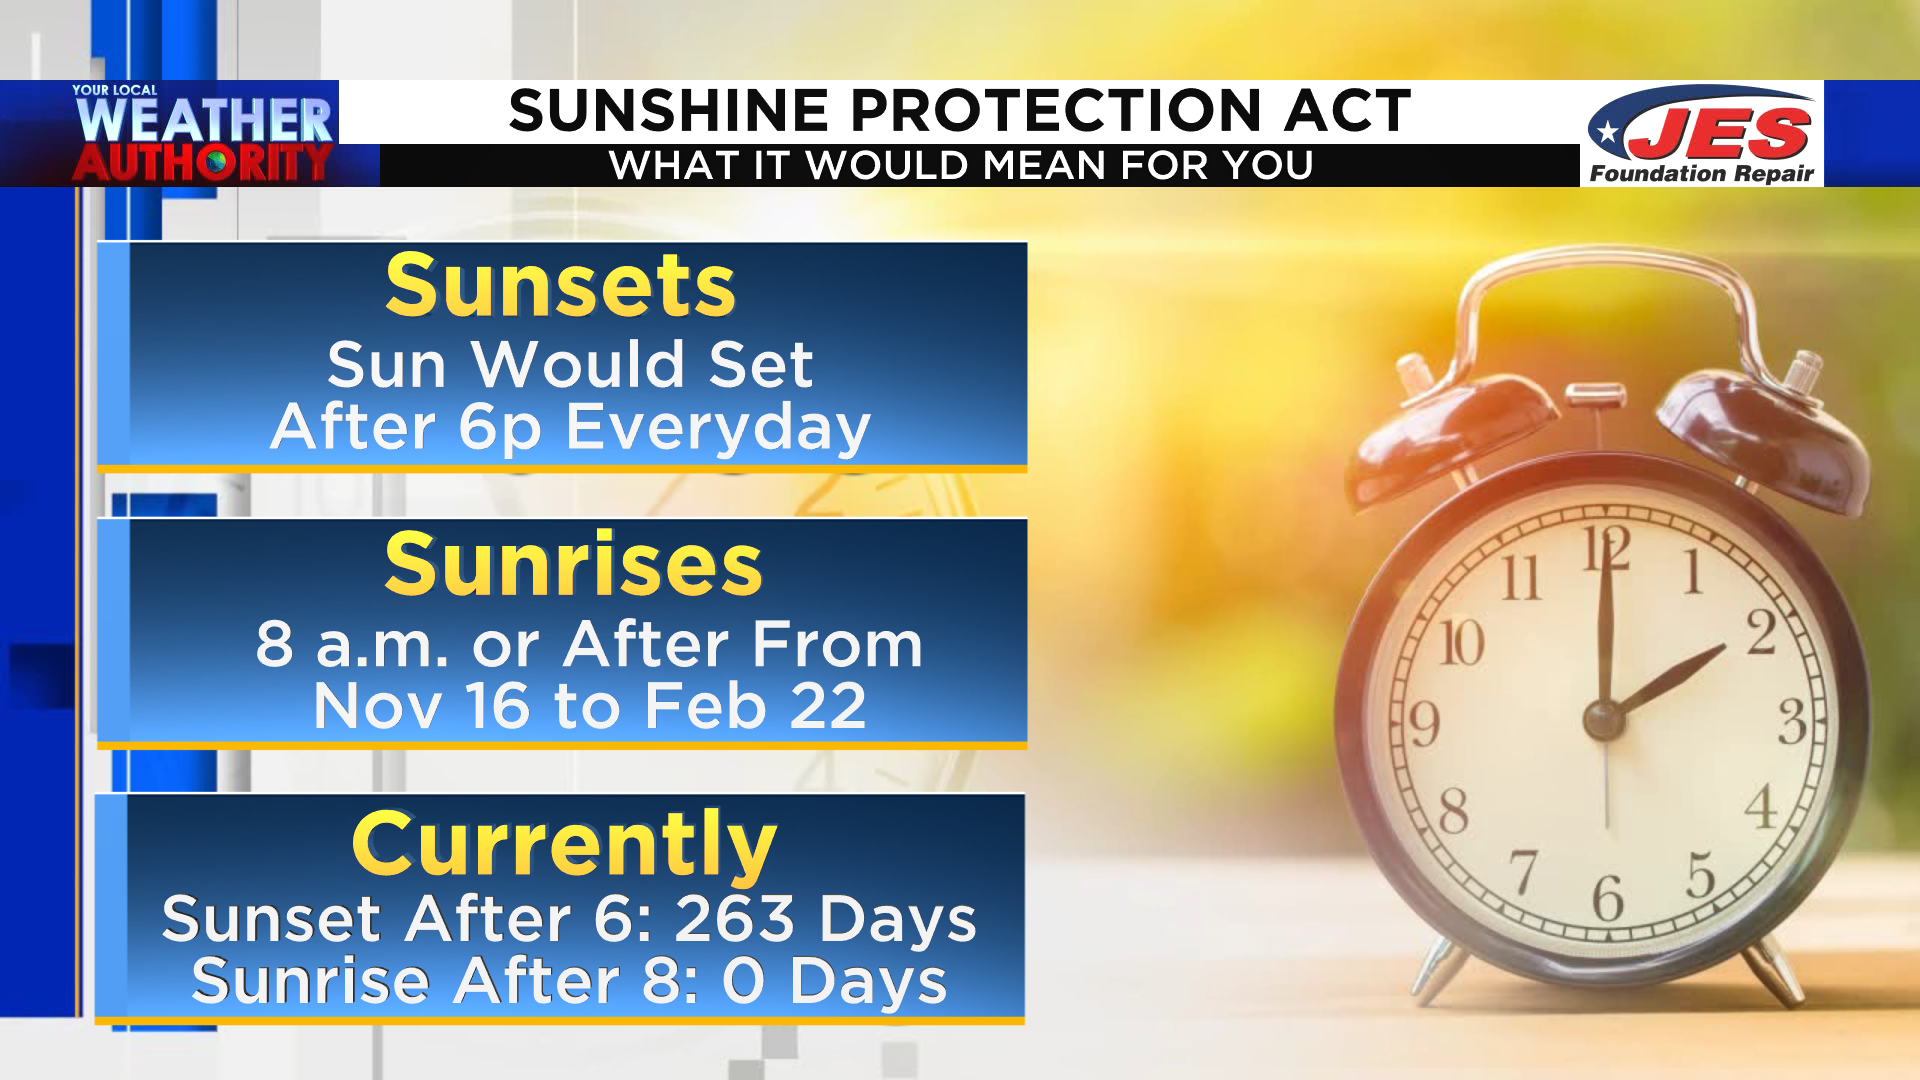 Sunshine Daydream: Florida Bill Would Make Daylight Saving Time